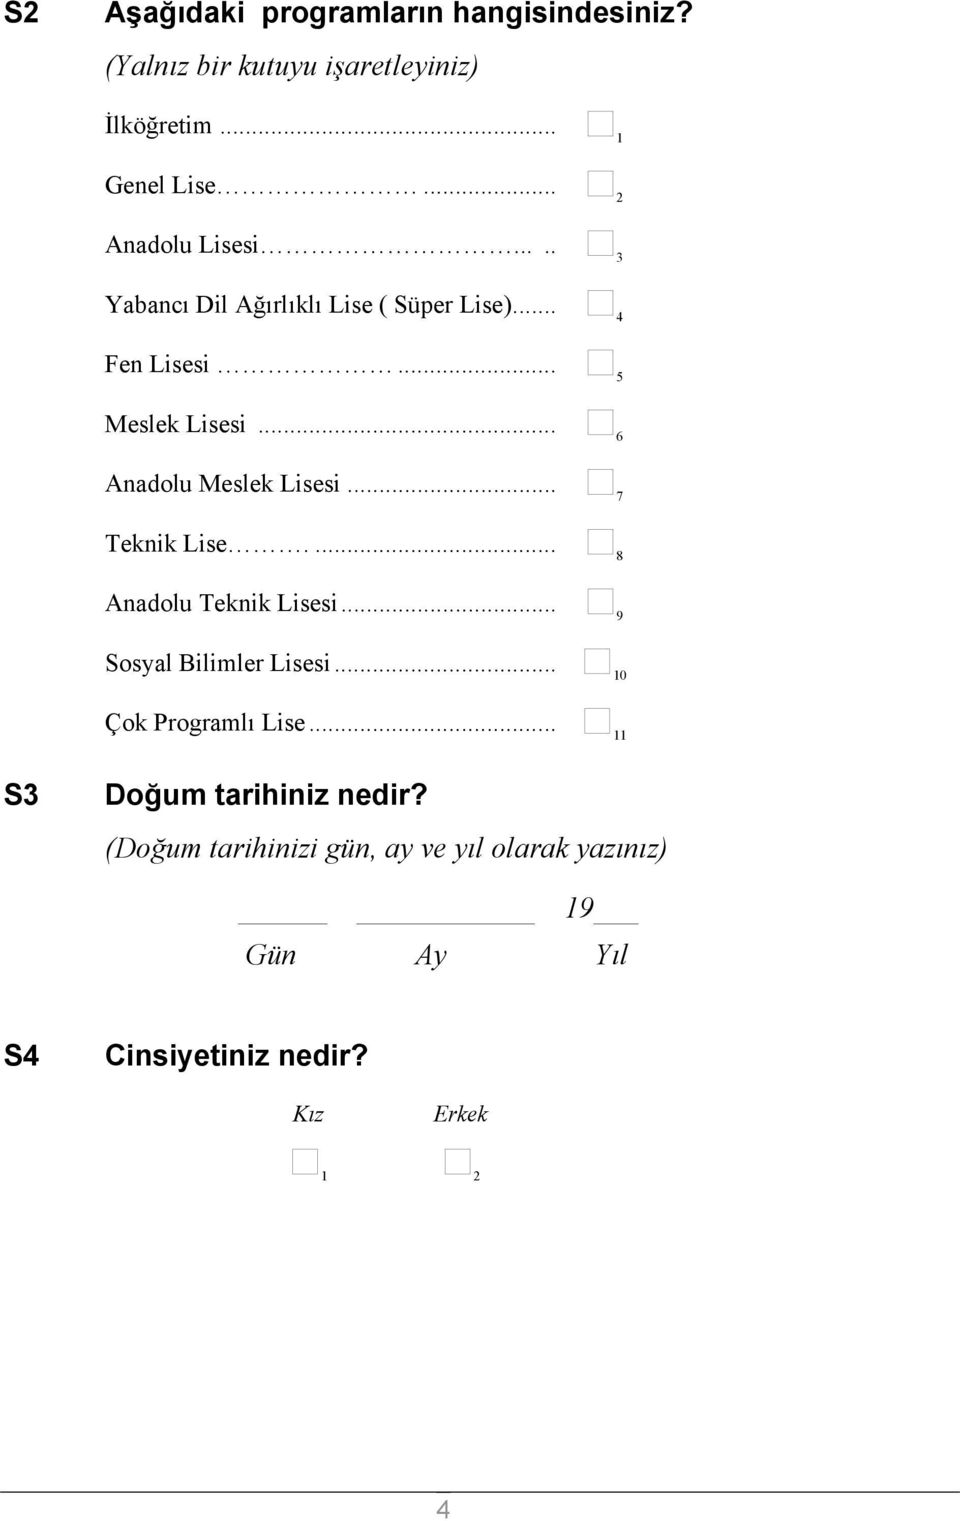 .. 6 Anadolu Meslek Lisesi... 7 Teknik Lise.... 8 Anadolu Teknik Lisesi... 9 Sosyal Bilimler Lisesi.